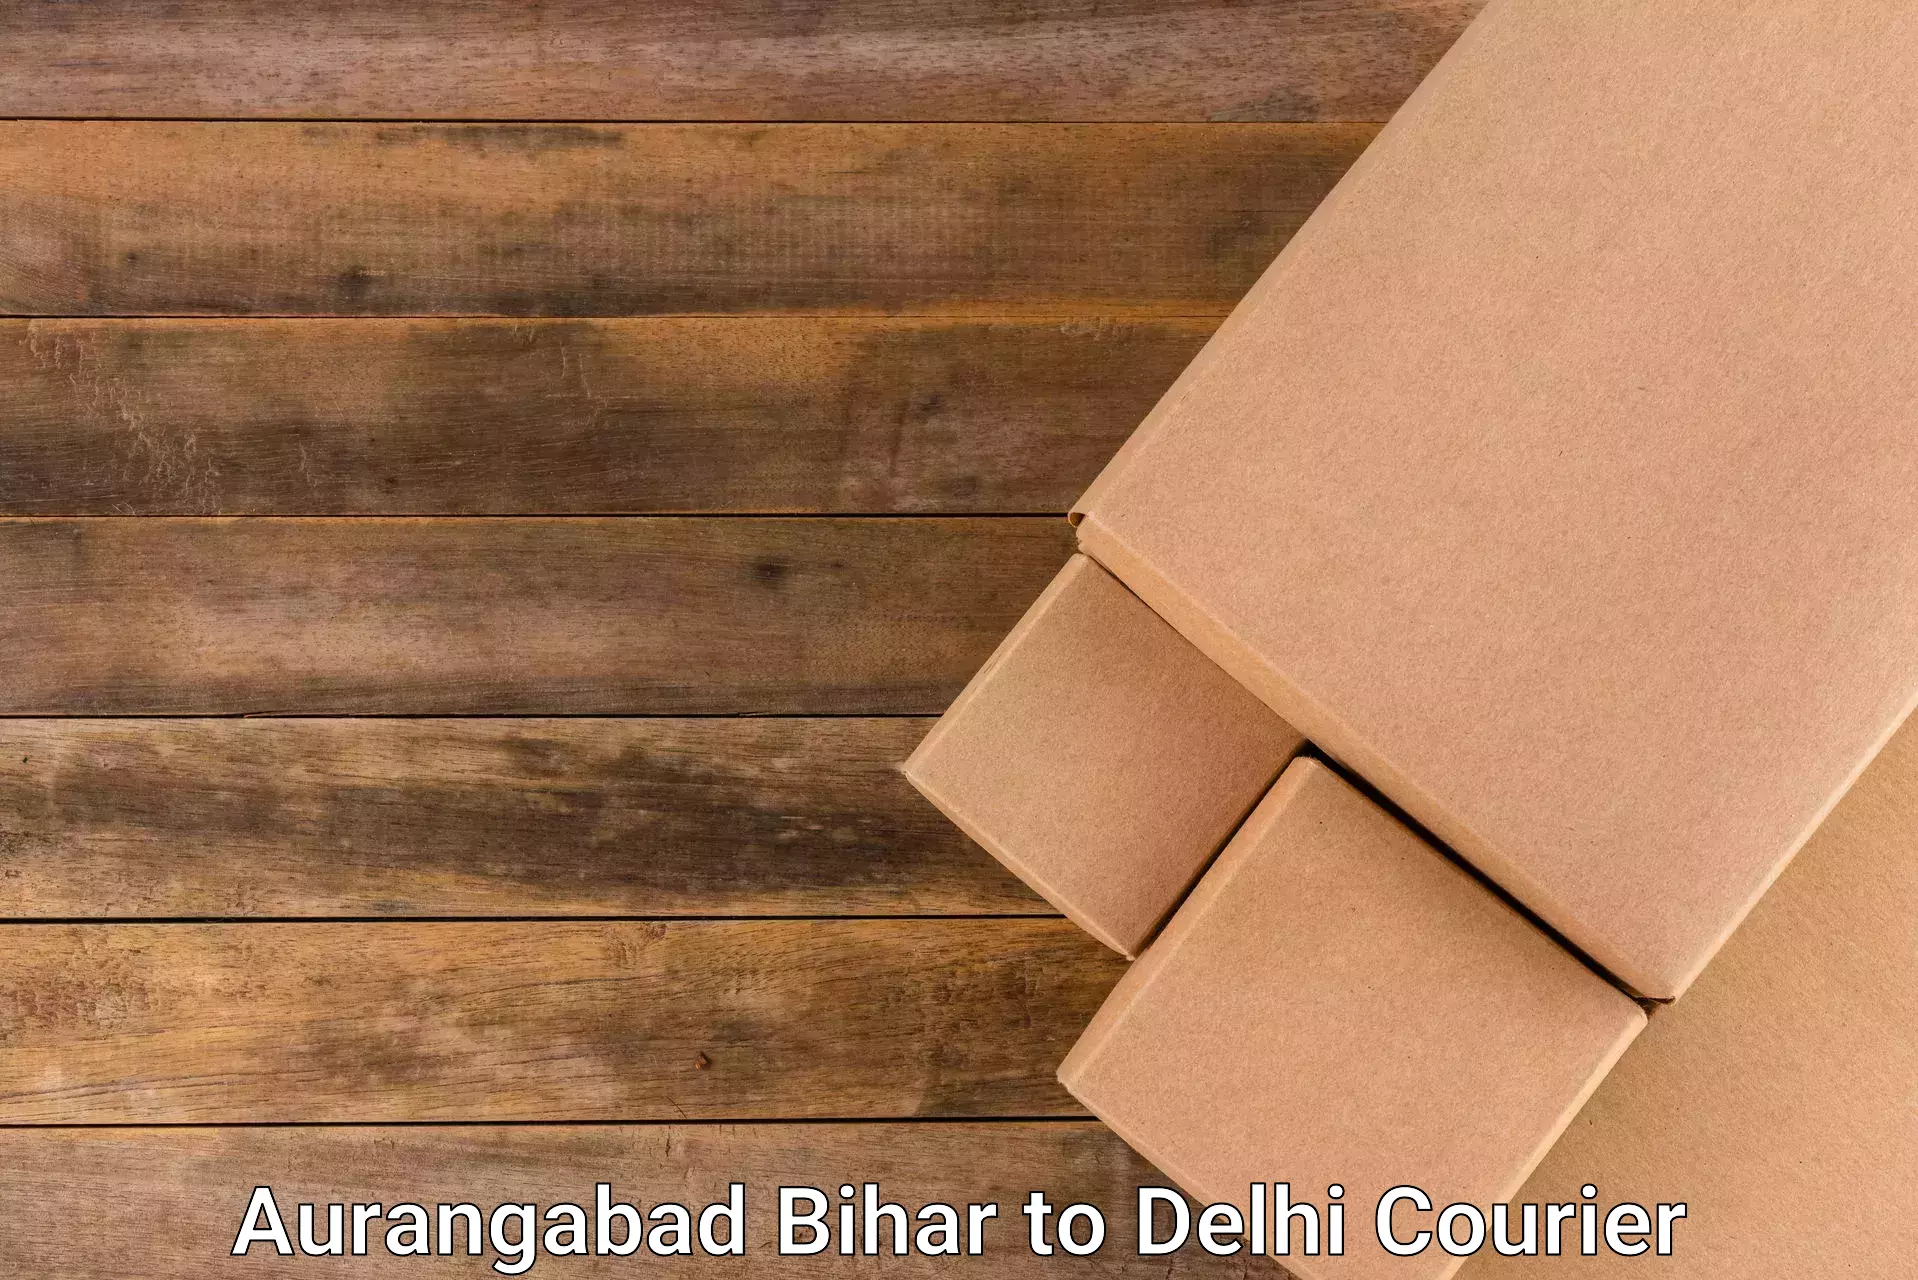 Advanced delivery network Aurangabad Bihar to Ramesh Nagar